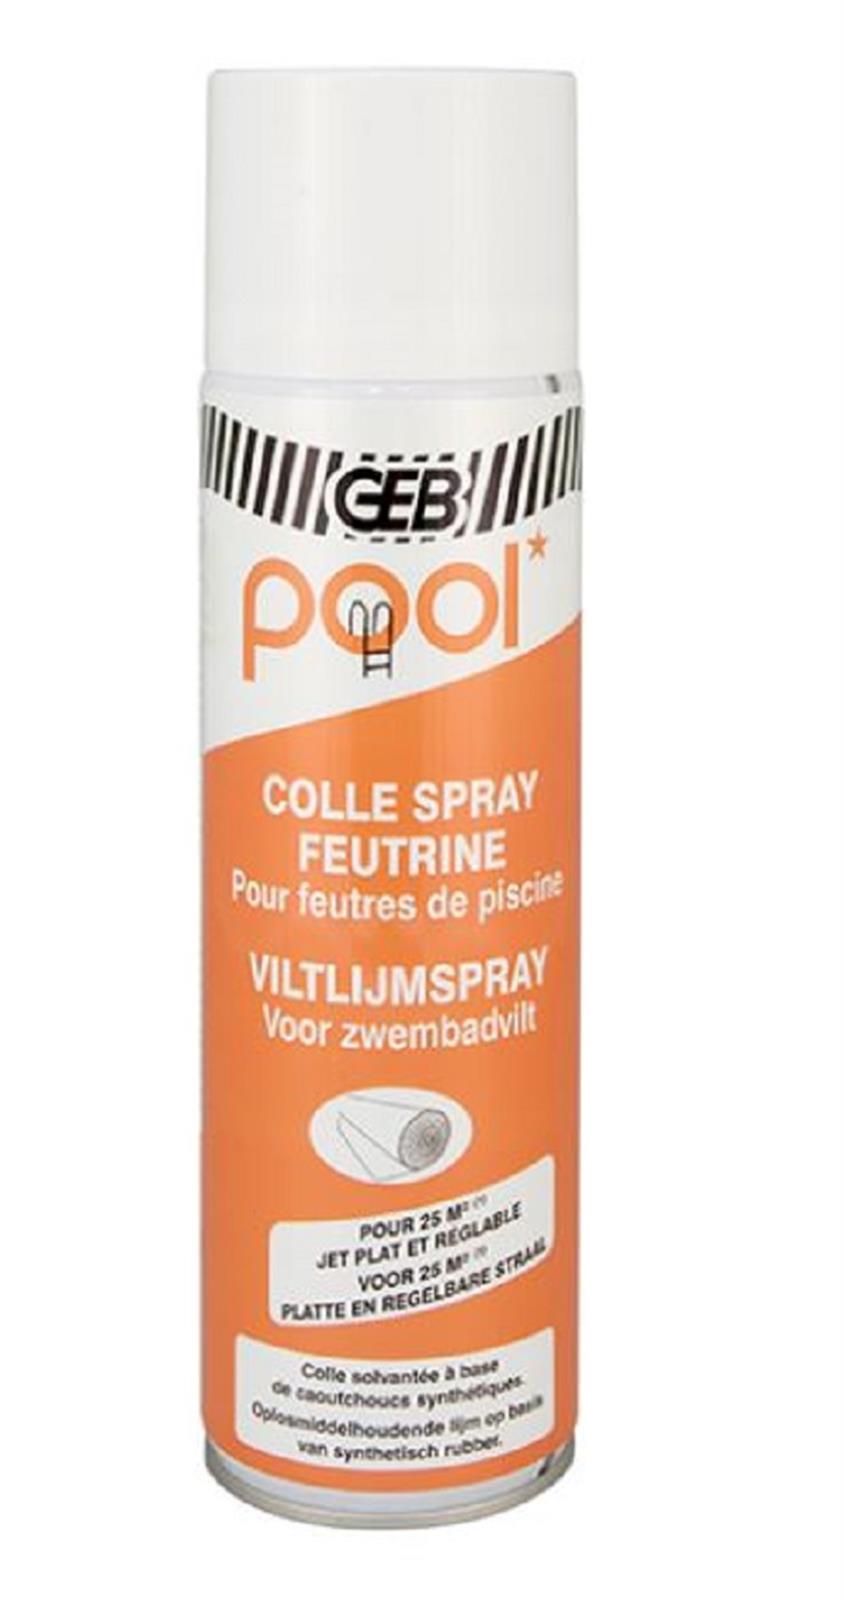 Pool colle spray feutrine (500 ml) - Pool colle feutrine aérosol 500 ml